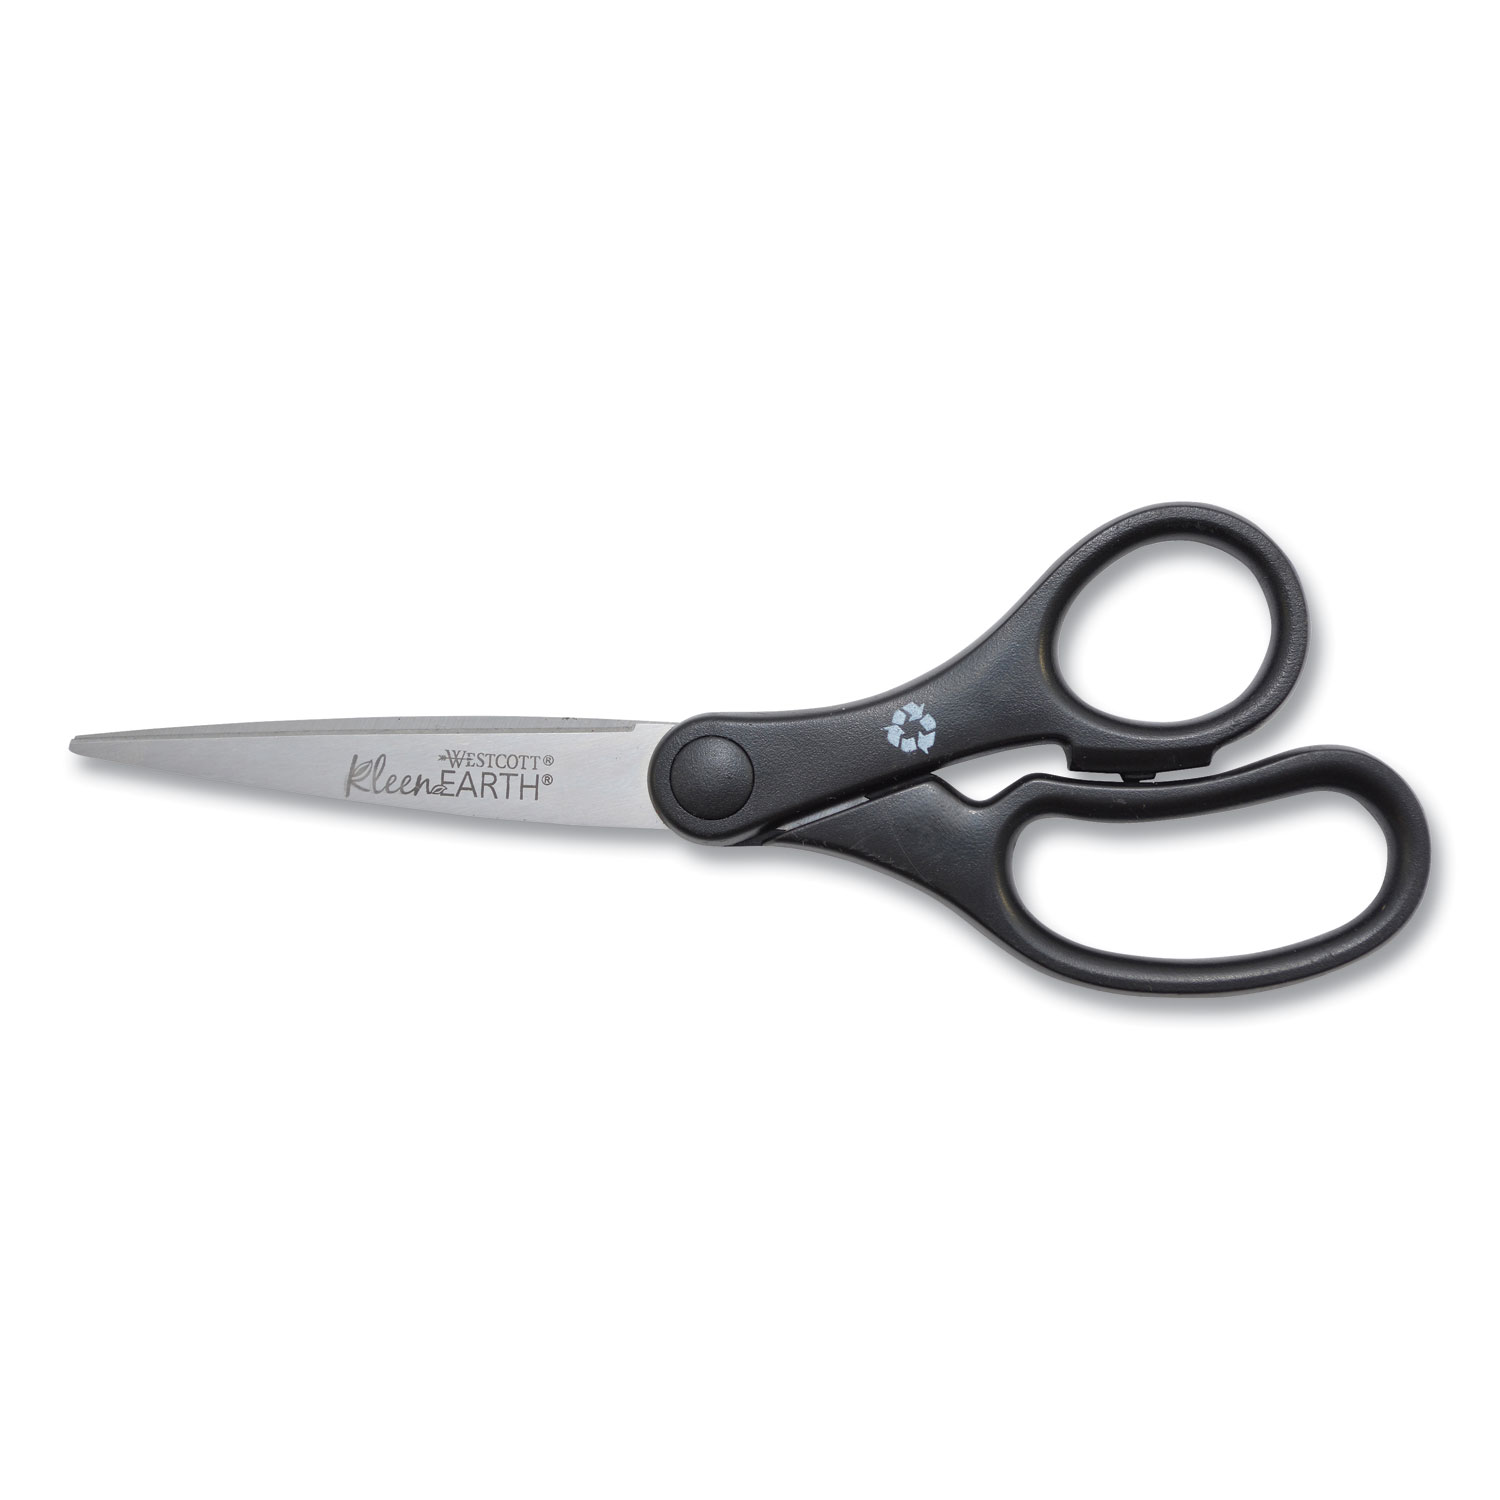  Westcott 15582 KleenEarth Basic Plastic Handle Scissors, Pointed Tip, 7 Long, 2.8 Cut Length, Black Straight Handle (ACM15582) 